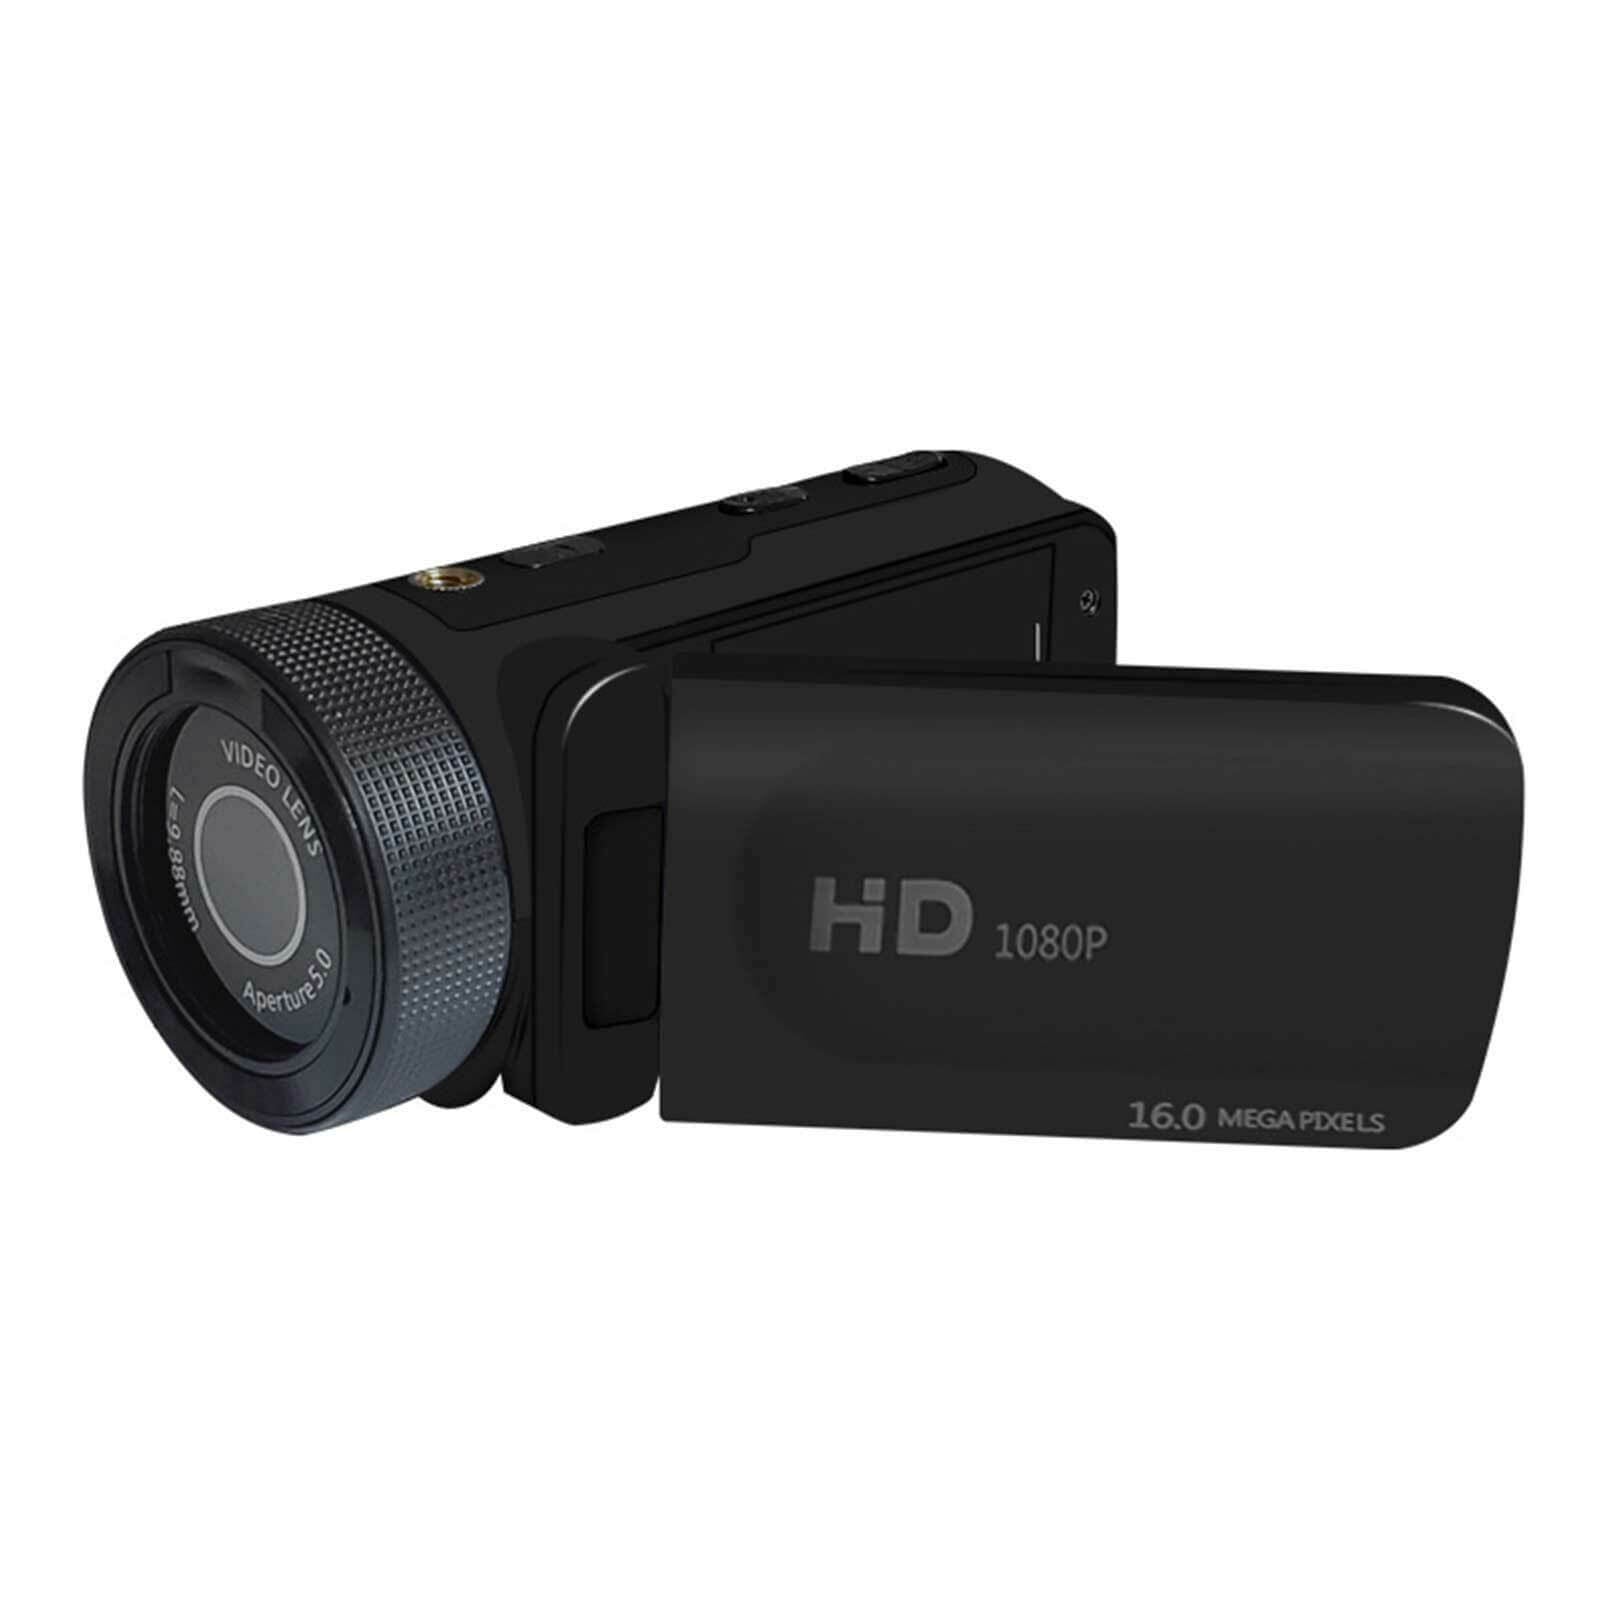 4K Video Camera Camcorder display showing